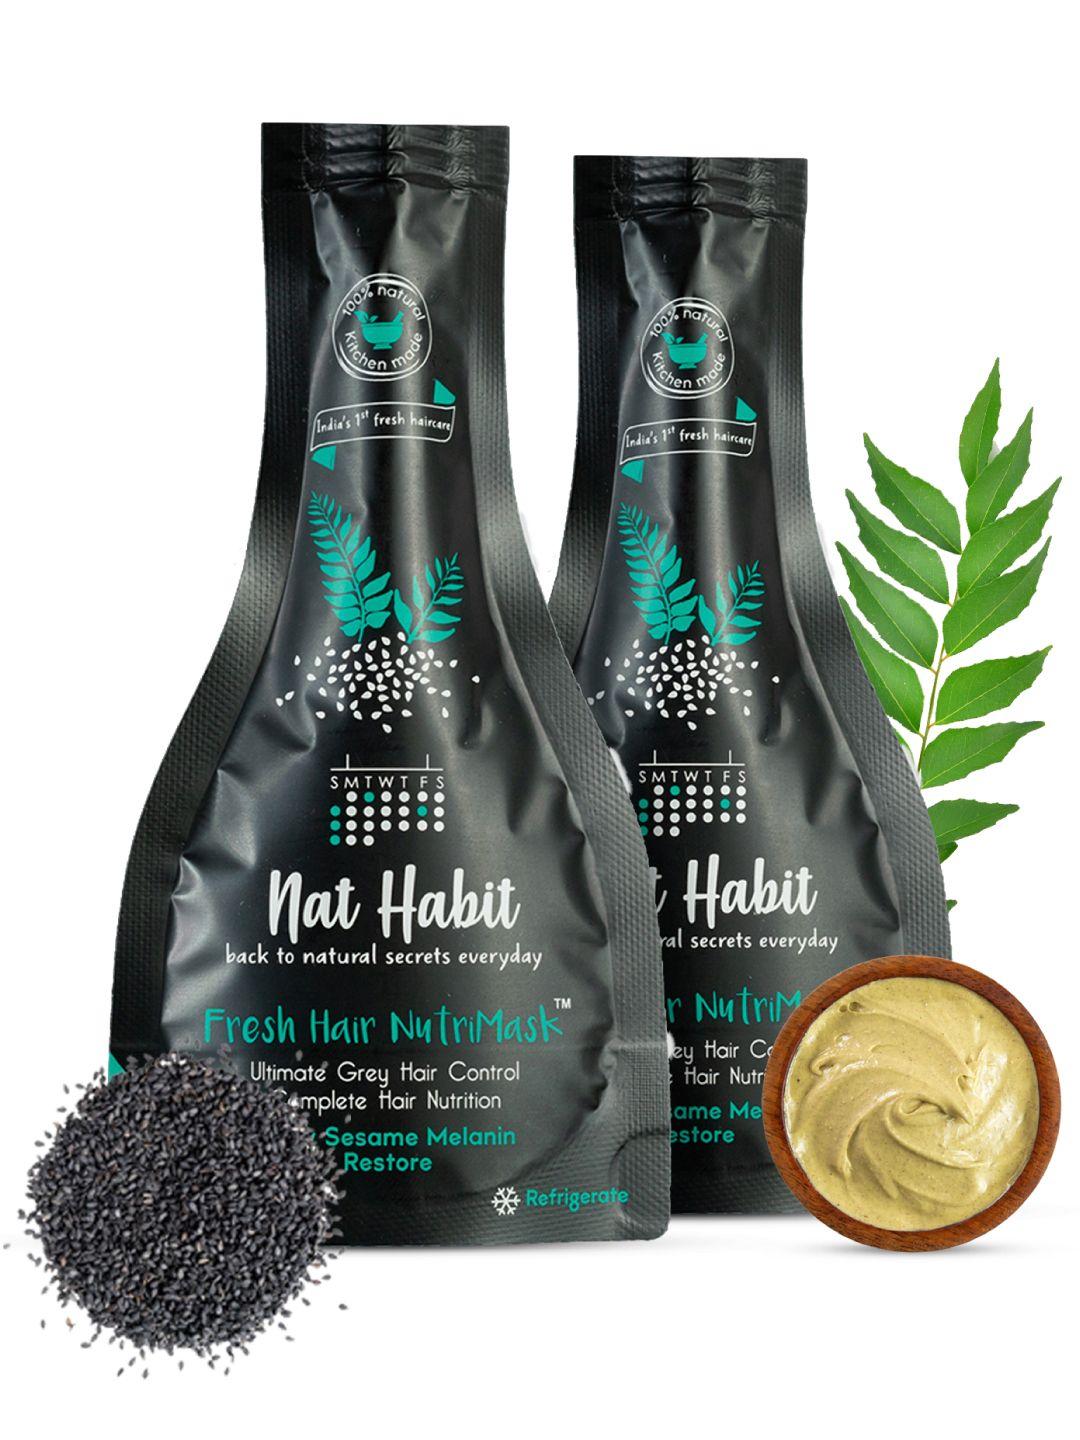 nat habit set of 2 curry sesame fresh hair nutrimask for grey hair control - 40g each